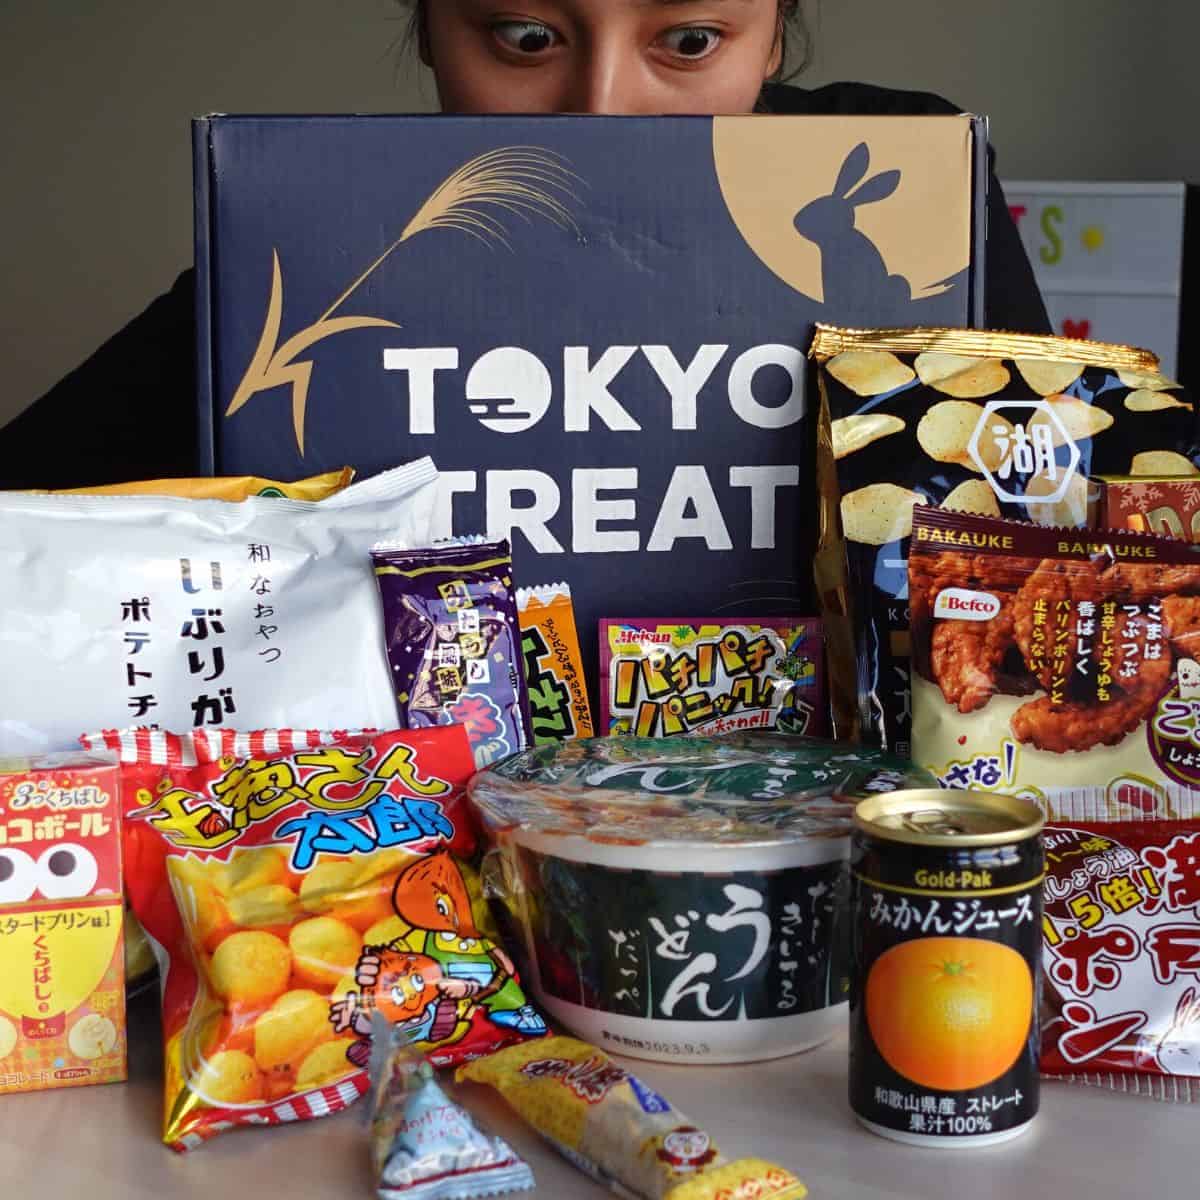 Tokyo Treat Review Subscription Box